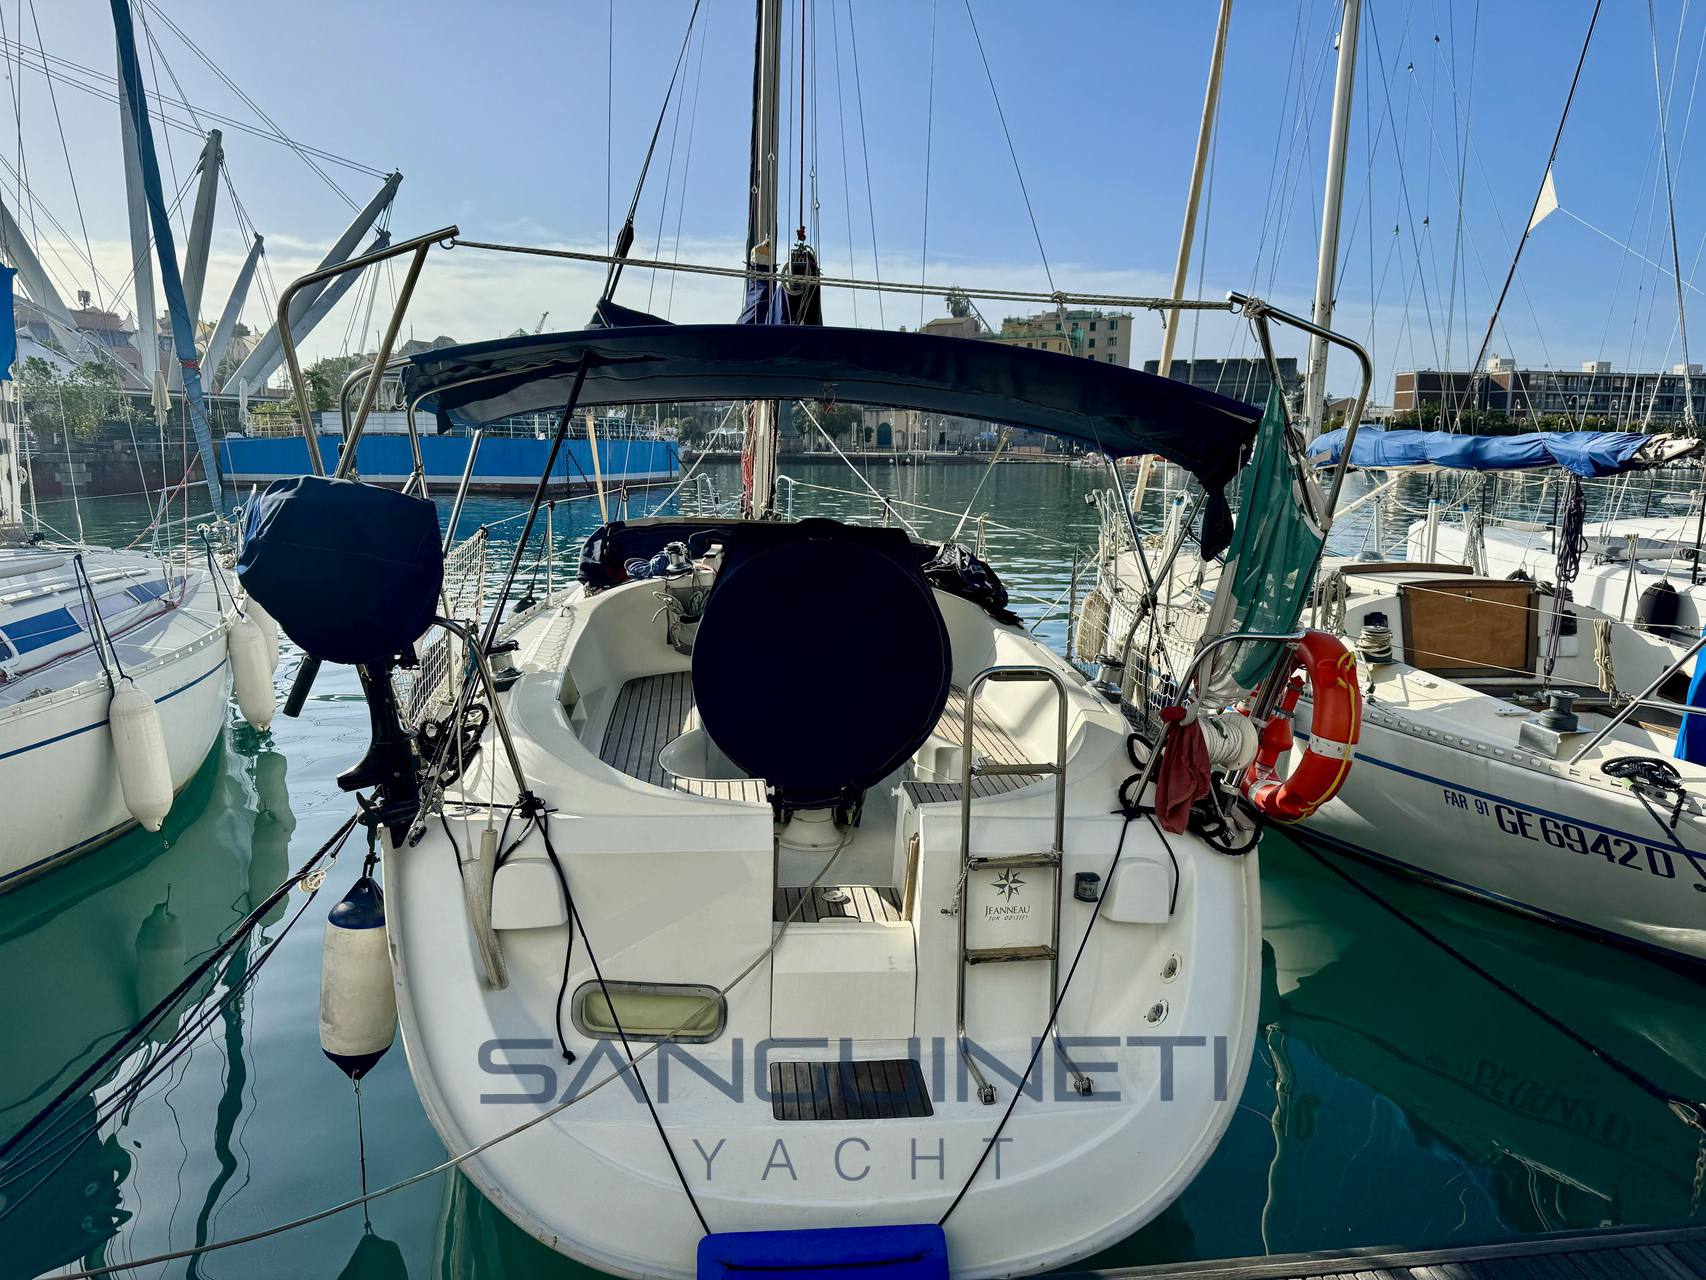 Jeanneau Sun odyssey 32.2 Barco de vela usado para venta